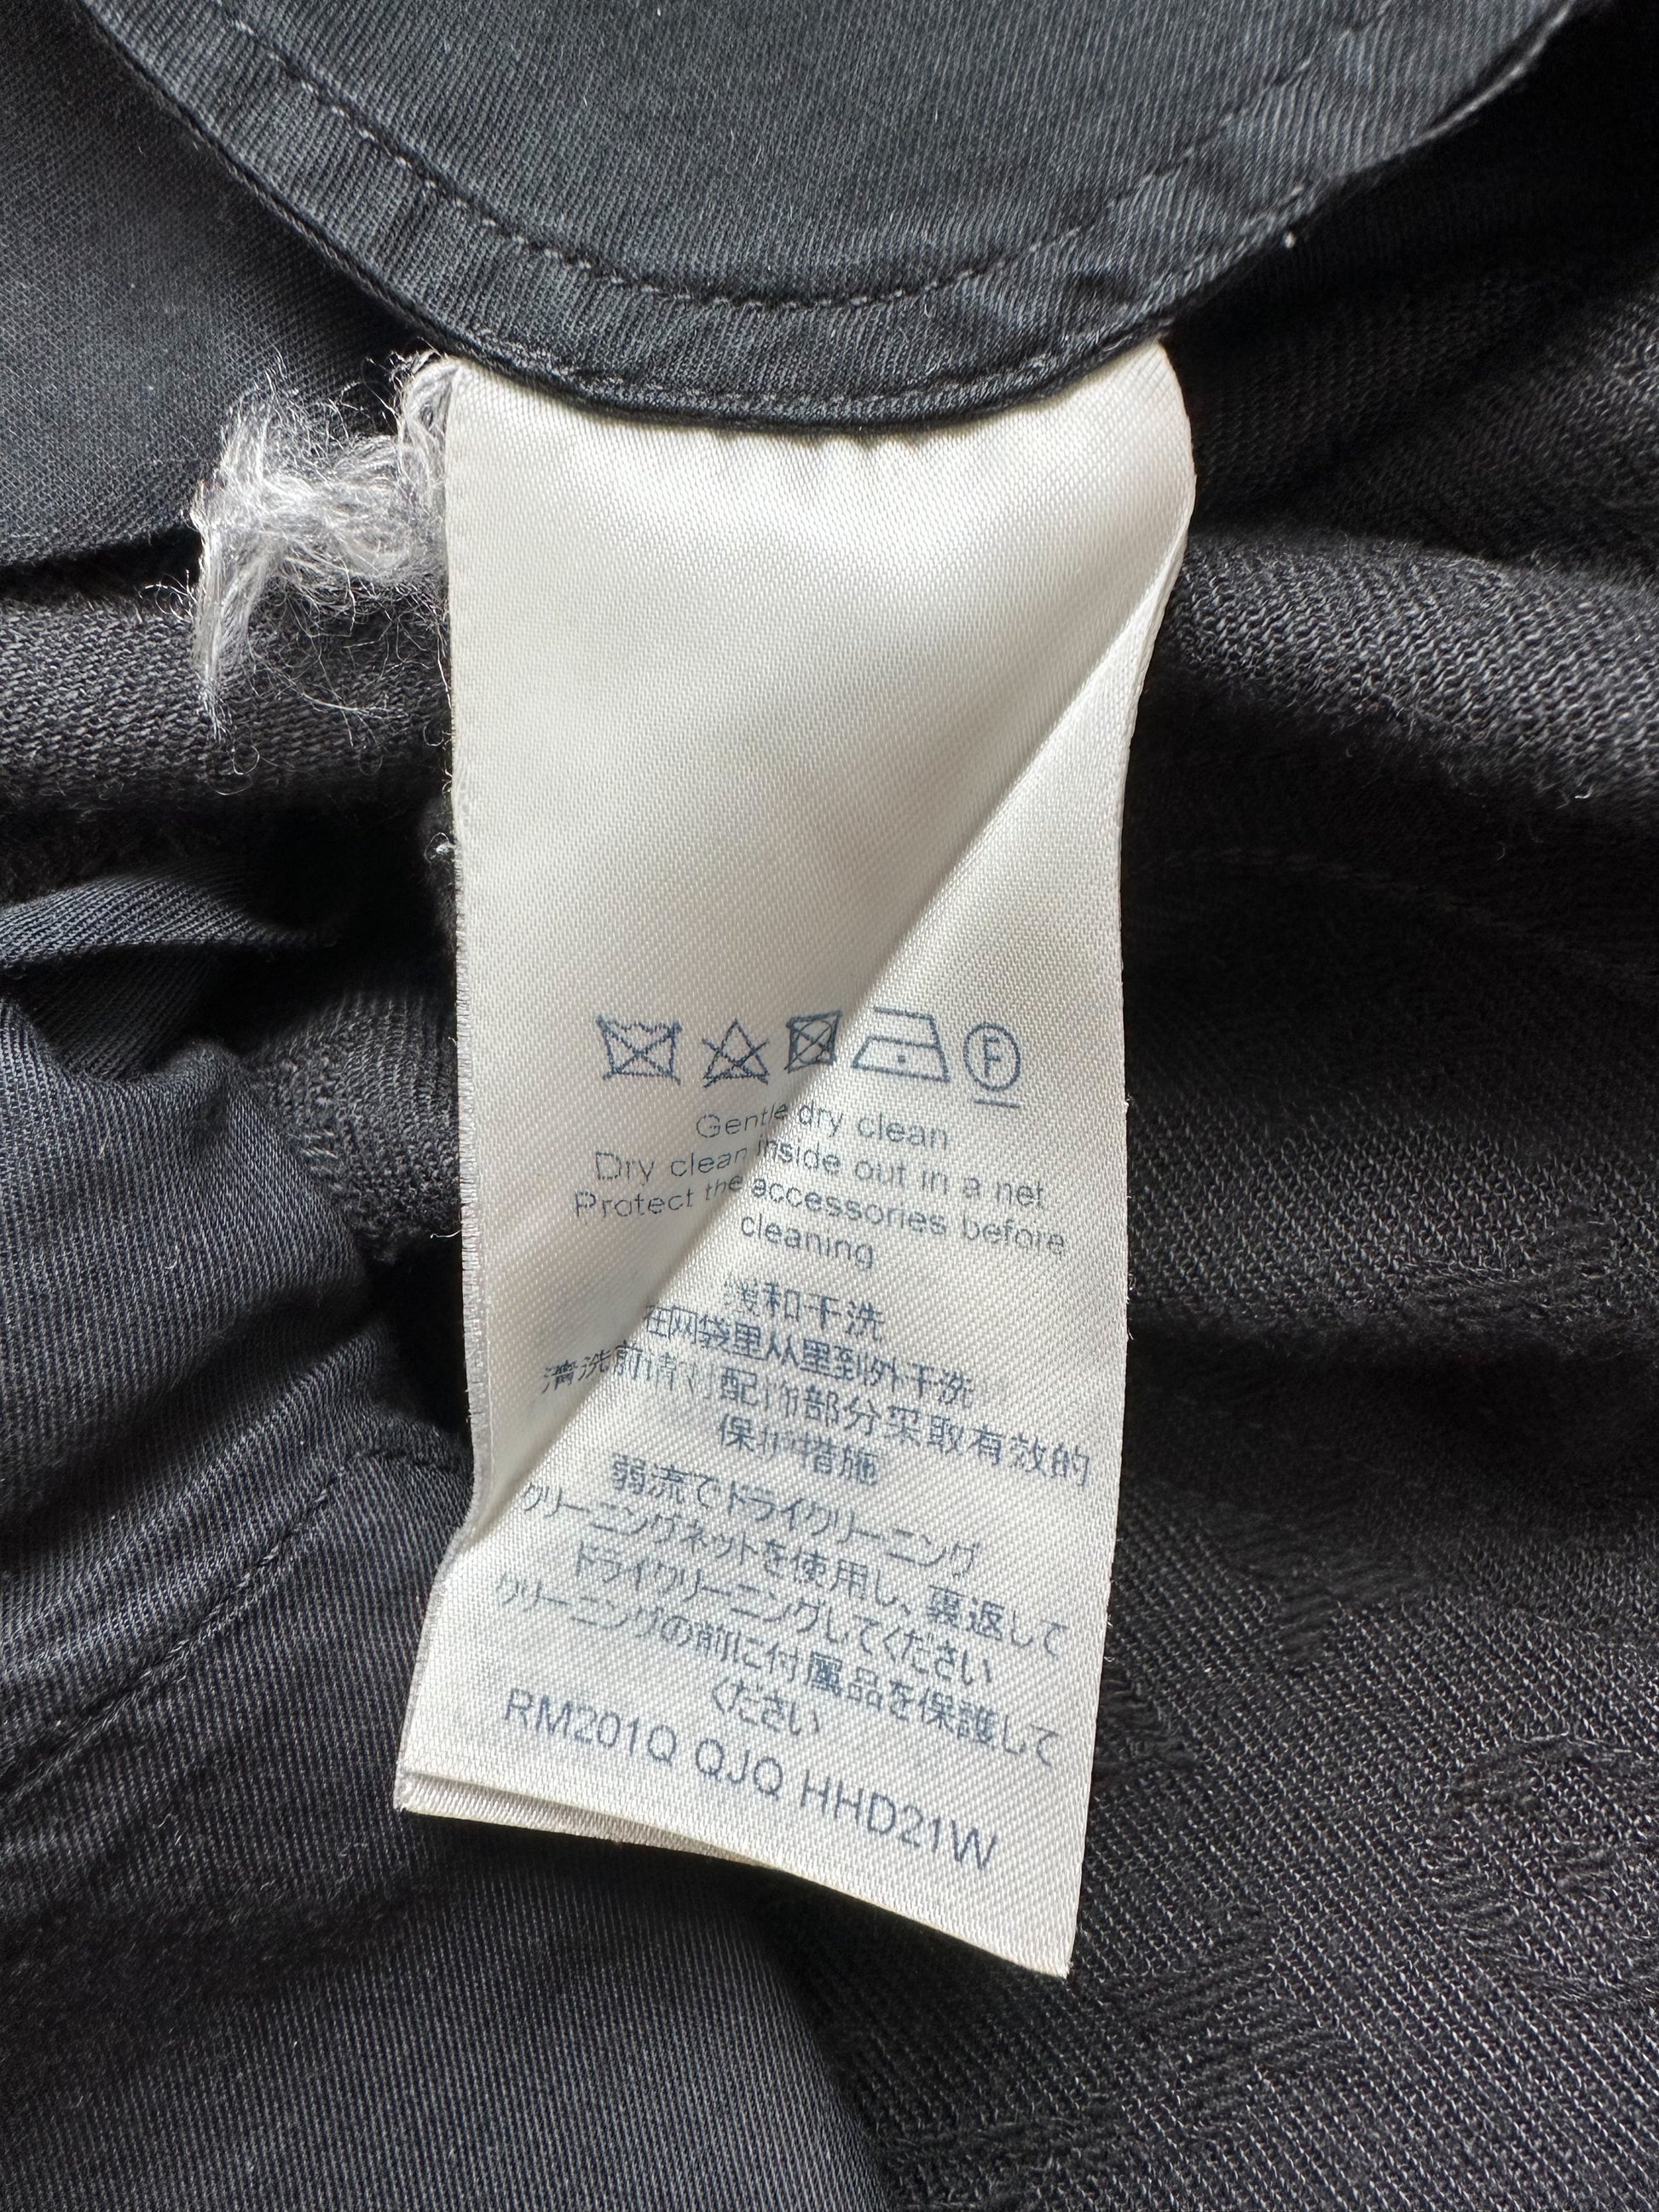 Louis Vuitton Slim Stretch Denim Pants BLACK. Size 32